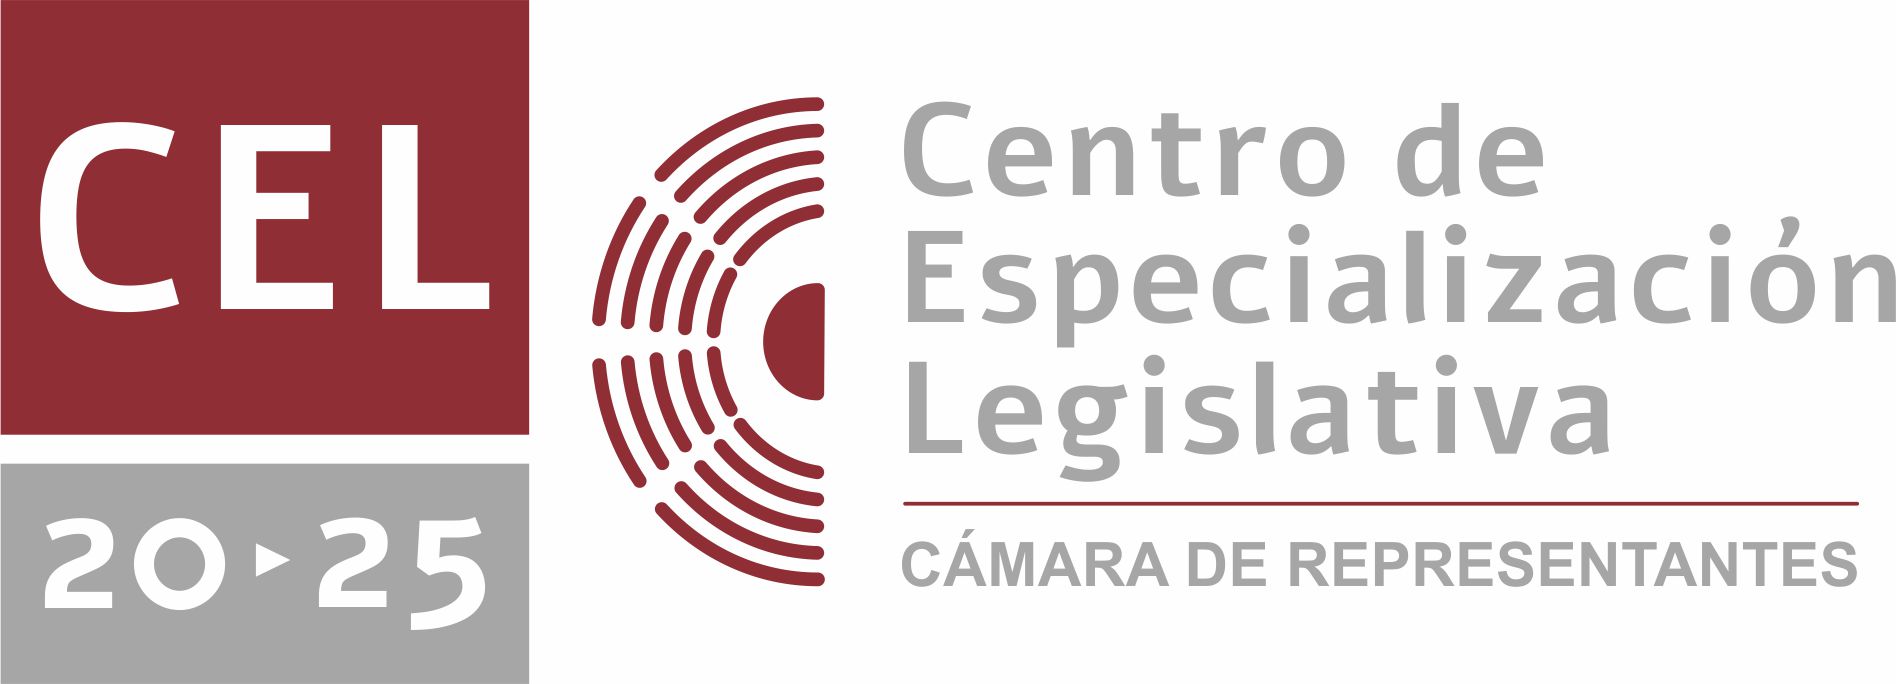 Centro de Especializacion Legislativa